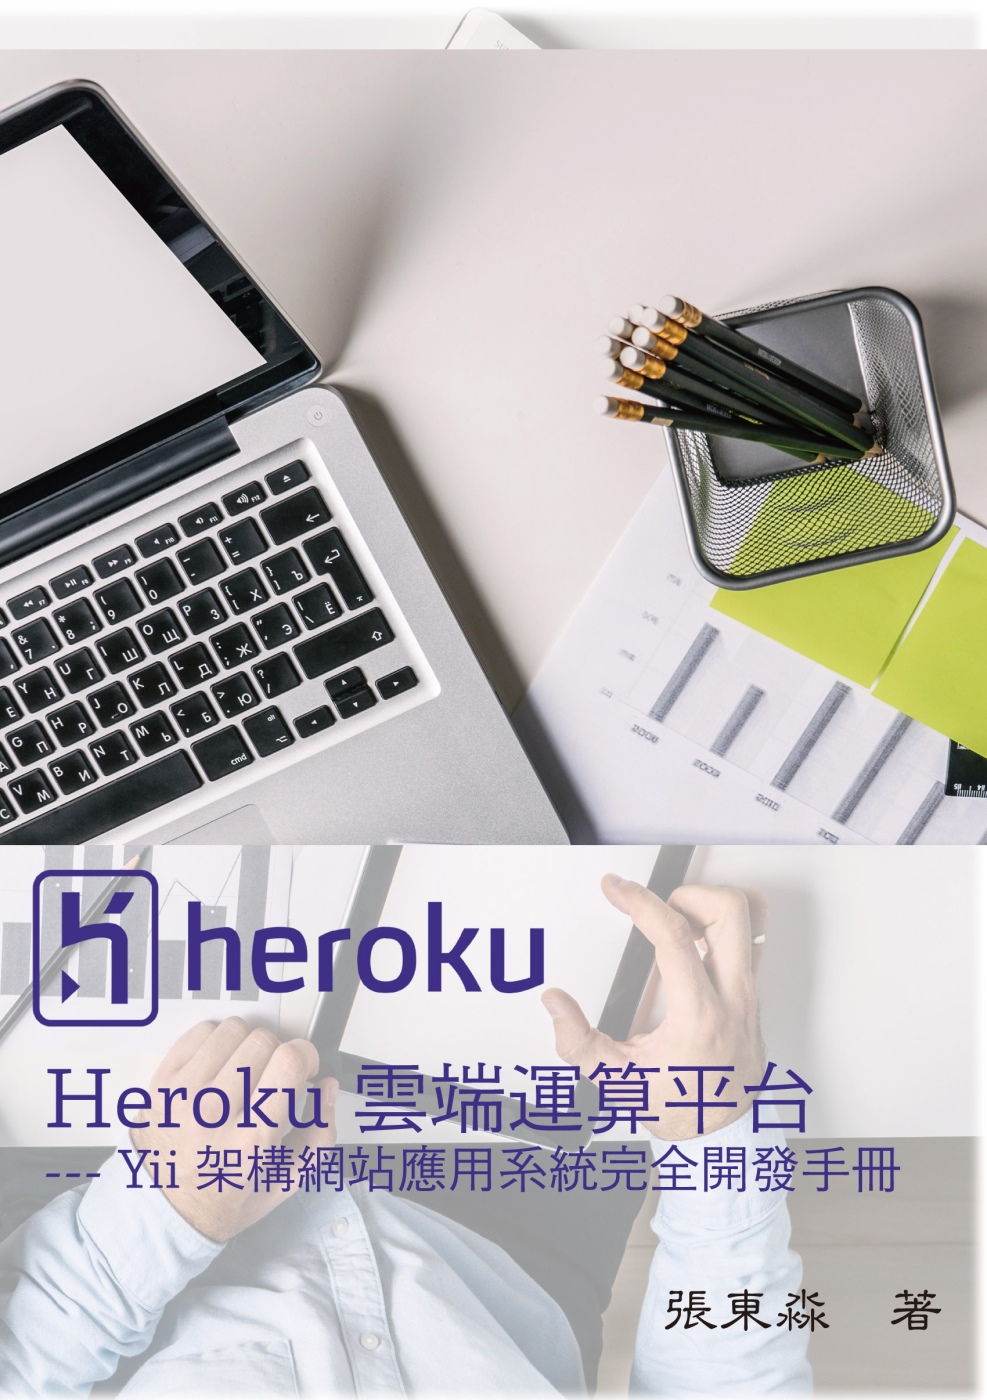 Heroku雲端運算平台